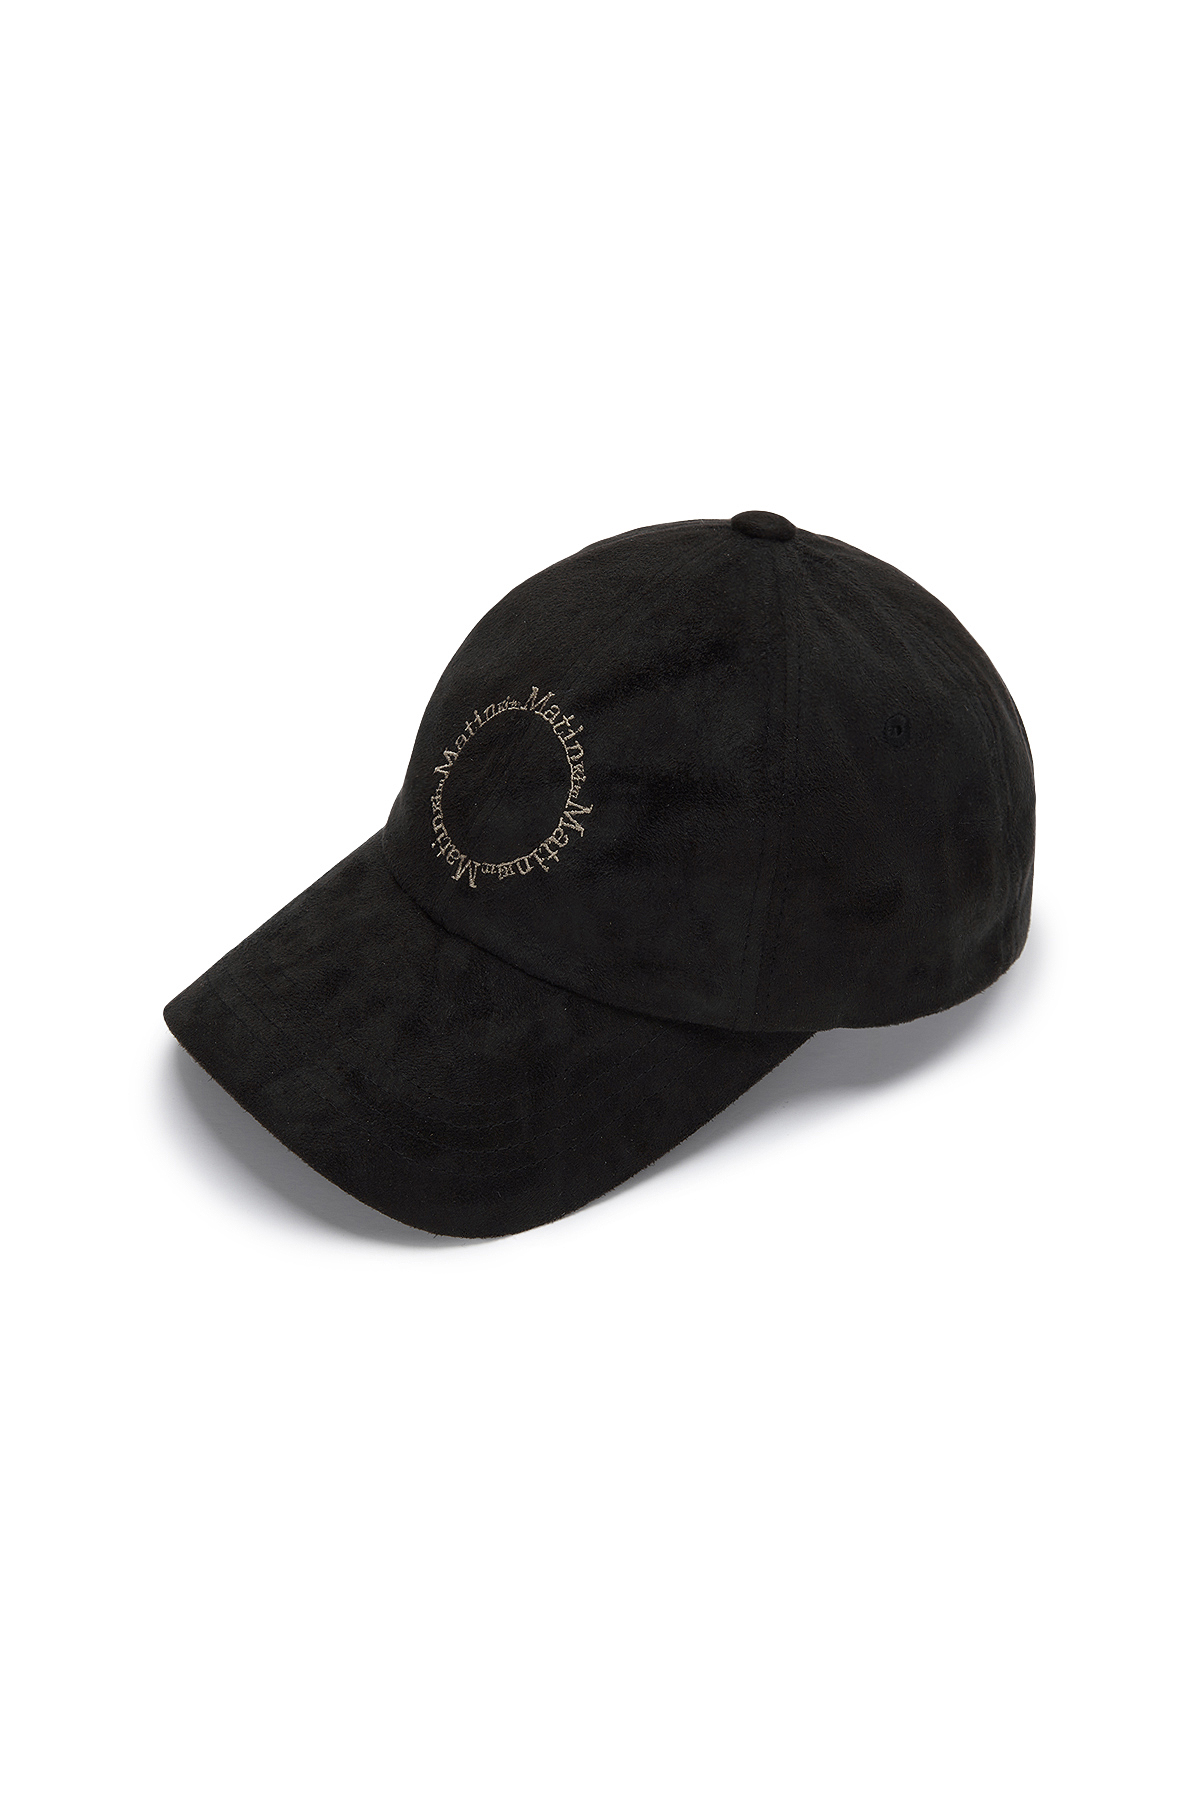 CIRCLE LOGO SUEDE BALL CAP IN BLACK